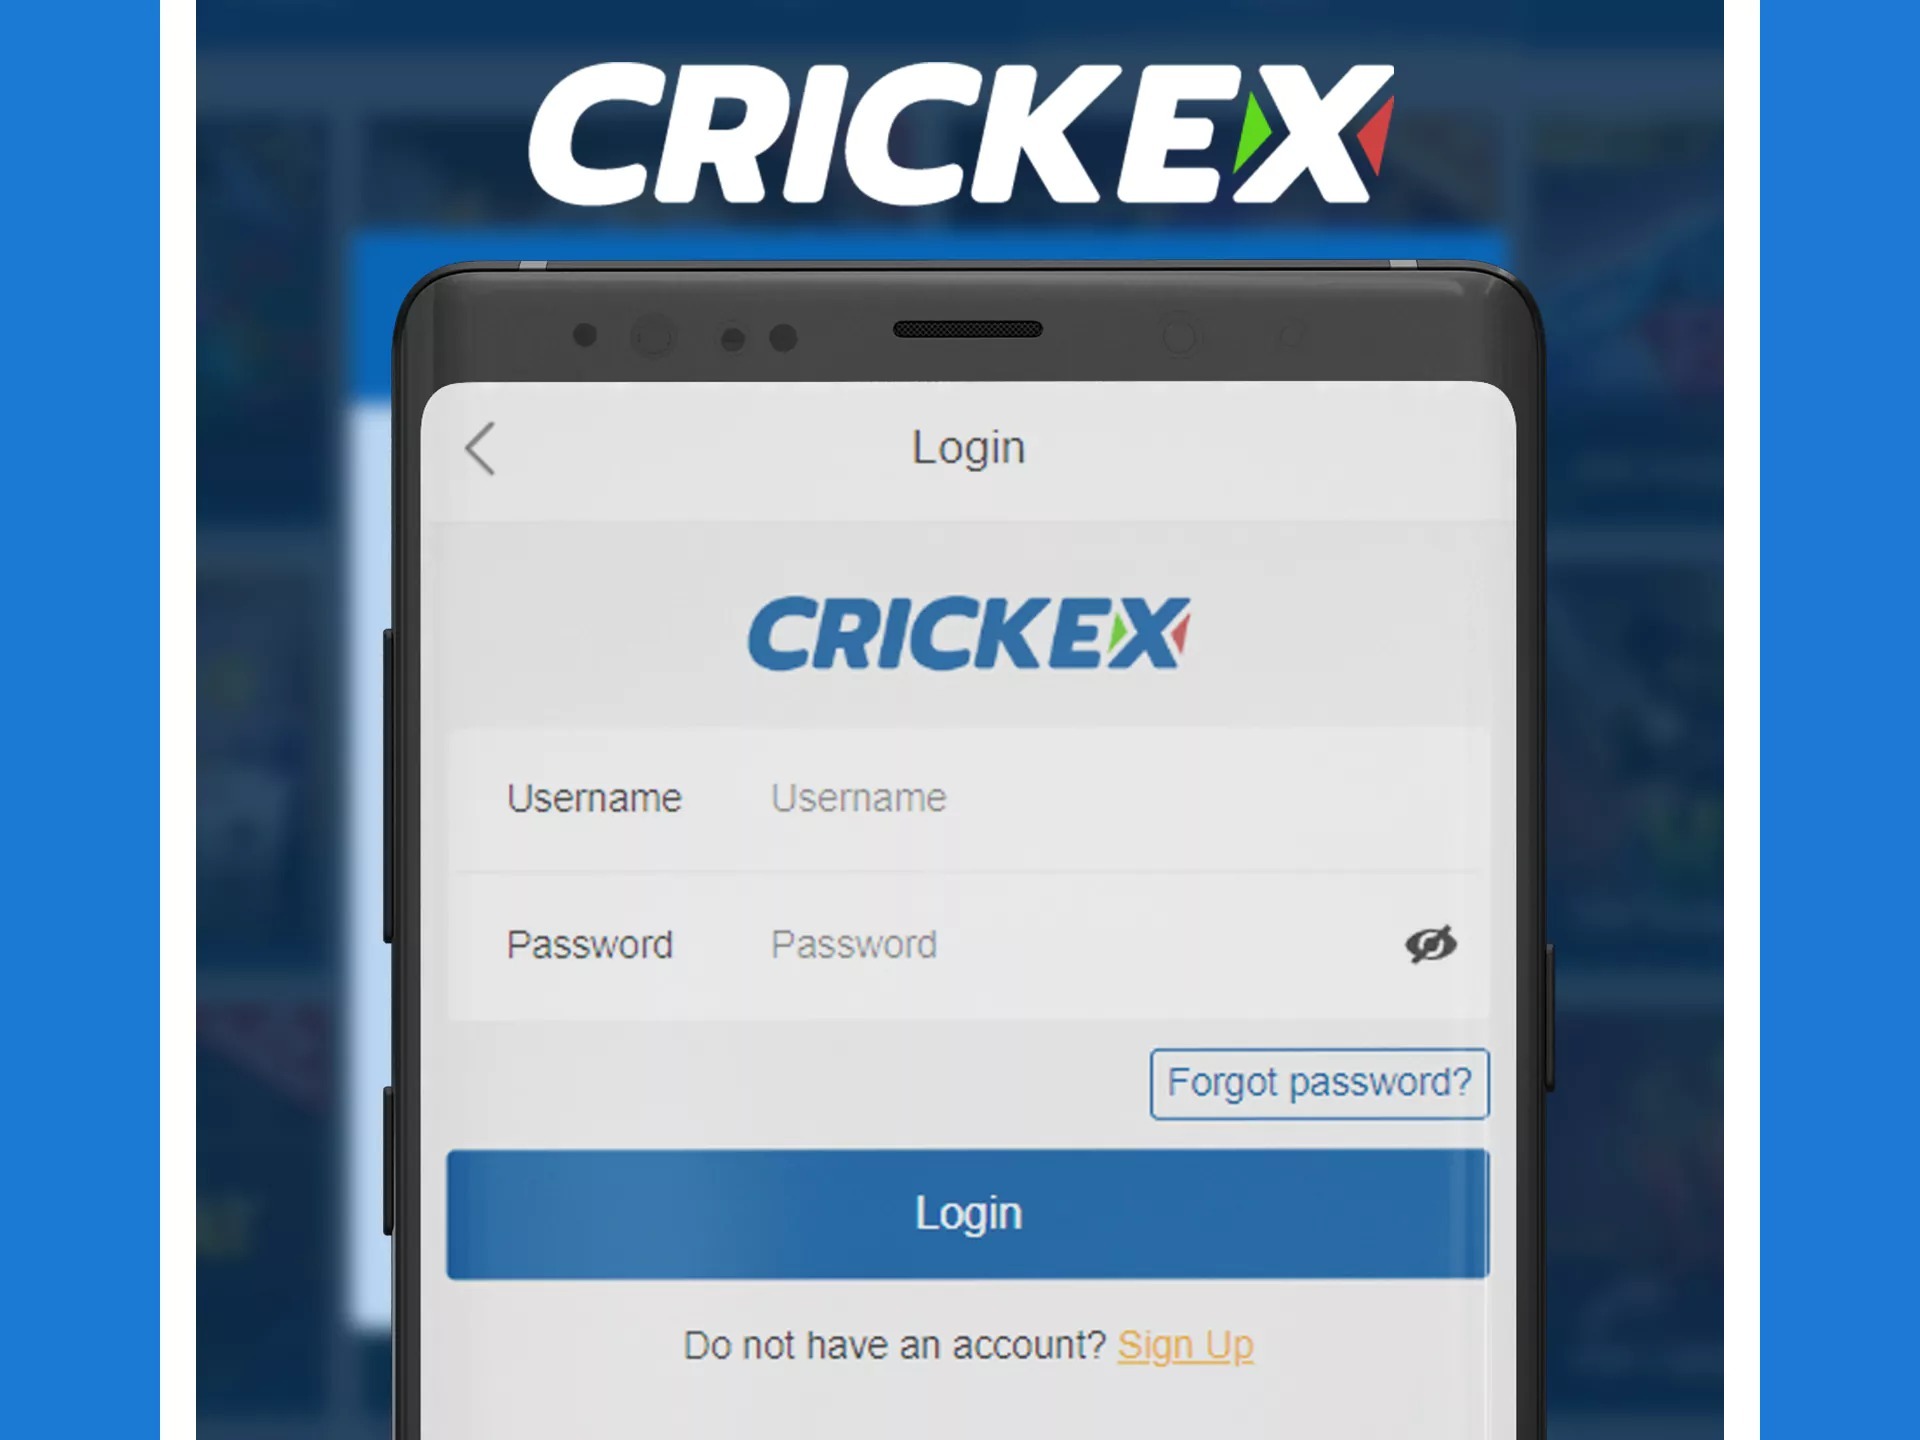 crickex-mobile-app